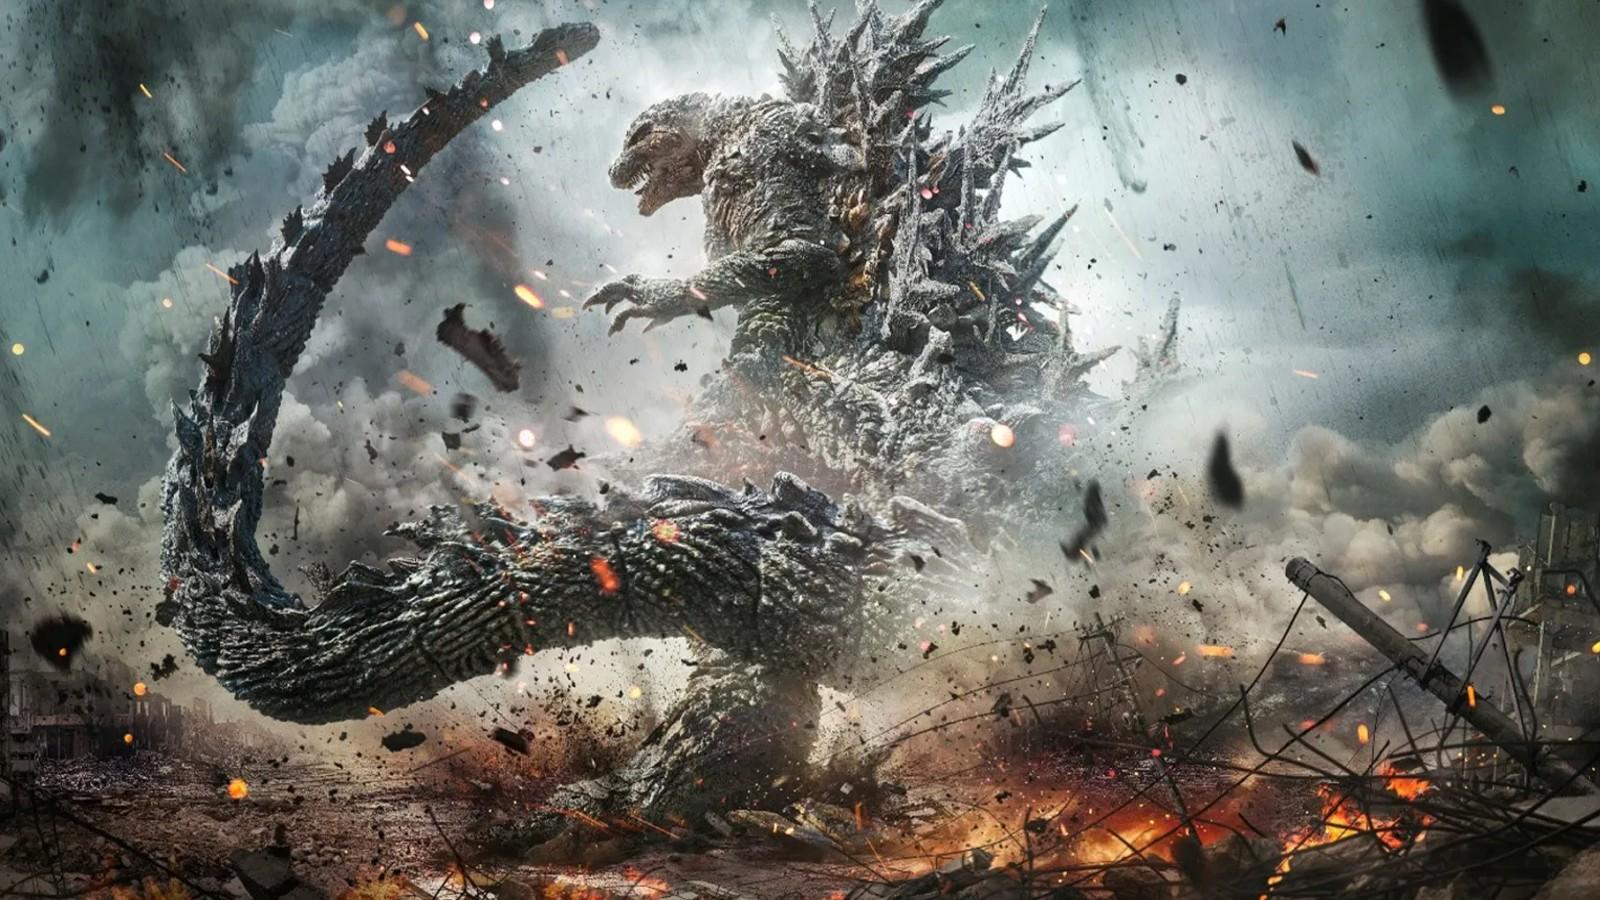 Godzilla tearing up the town in Godzilla Minus One.